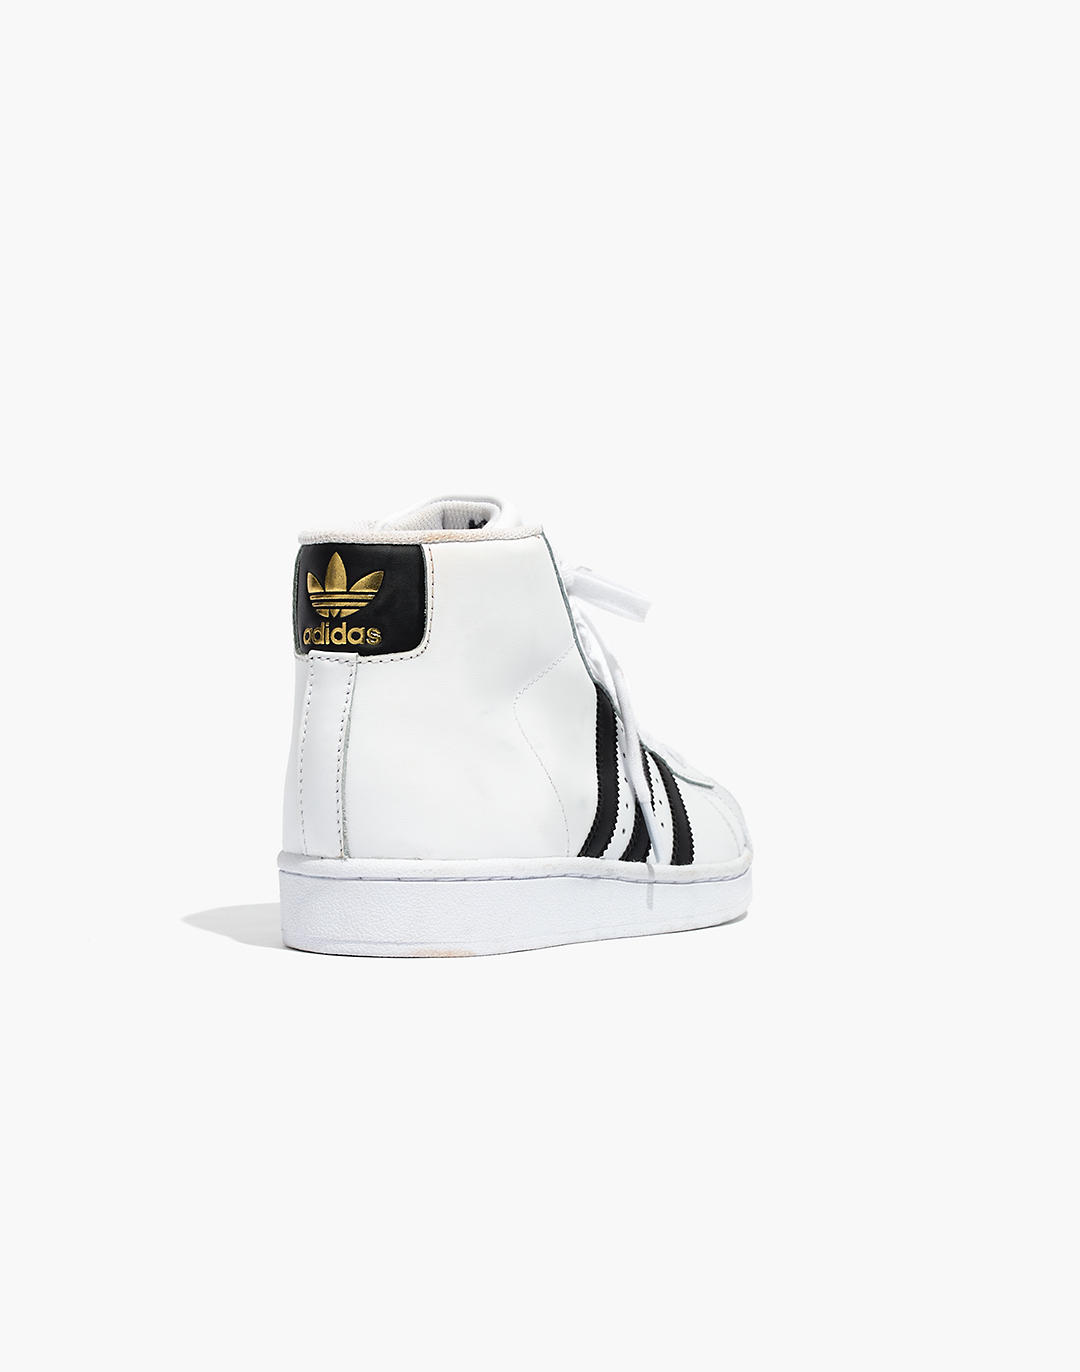 Ventilar Observatorio Parcial Adidas® Superstar™ Pro Model High-Top Sneakers